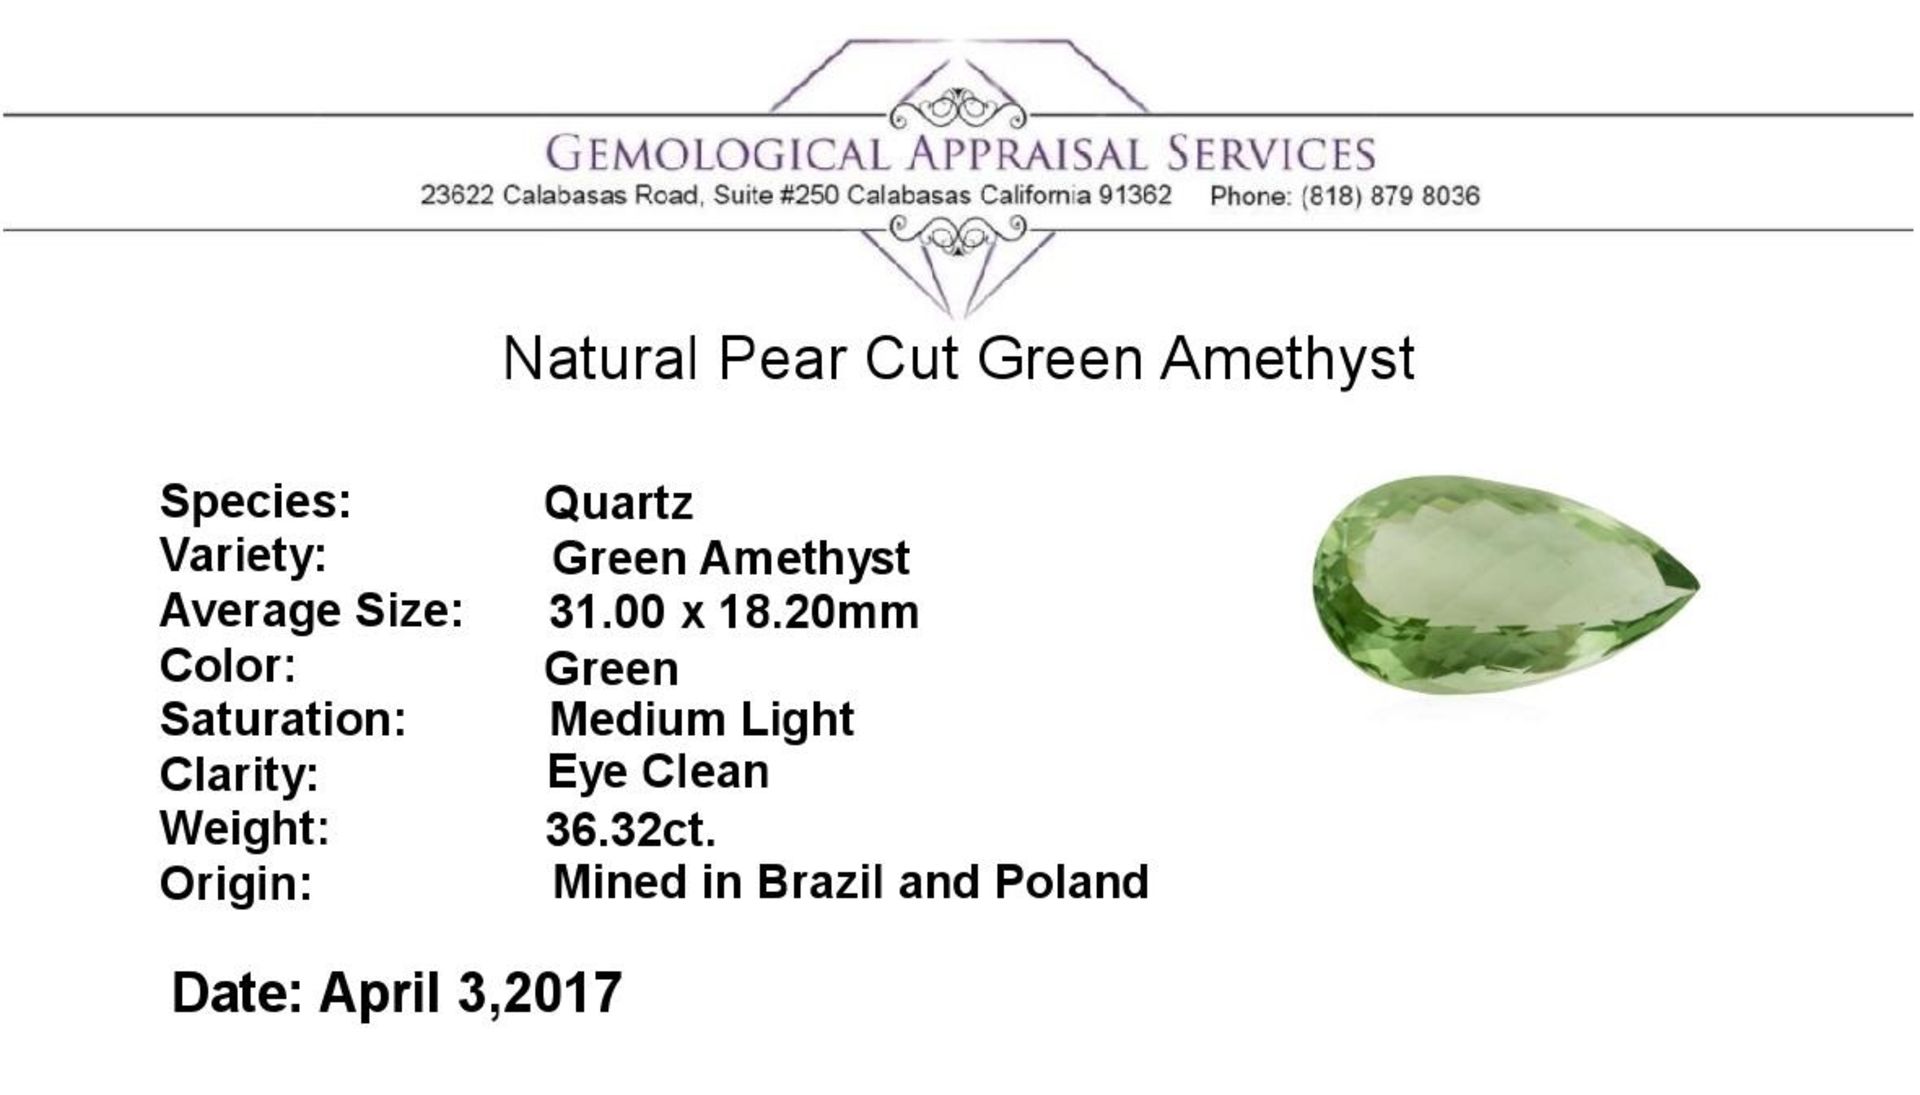 36.32 ct. Natural Pear Cut Green Amethyst - Image 3 of 3